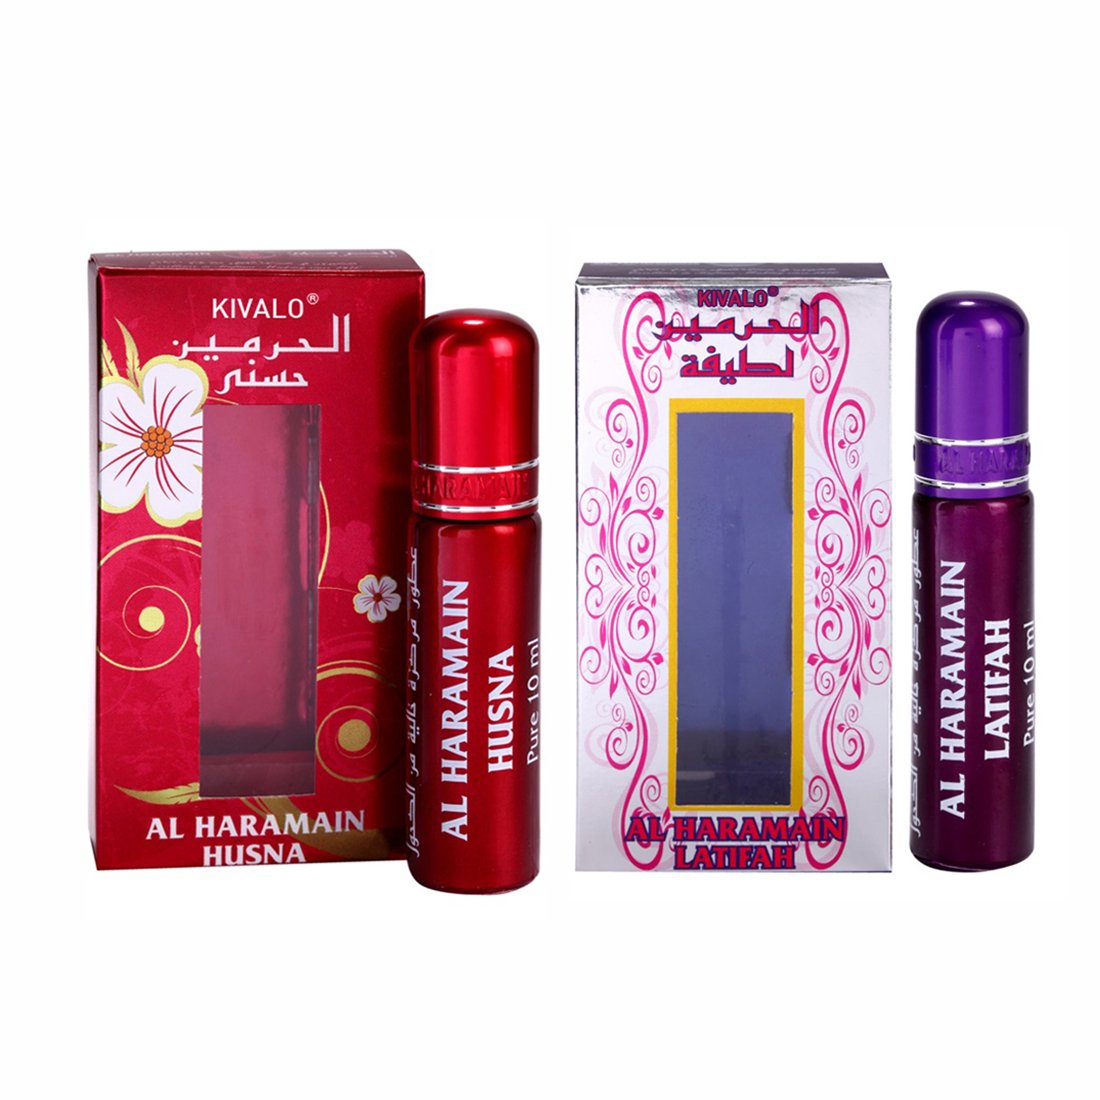 Al Haramain Husna & Latifah Fragrance Pure Original Roll On Attar Combo Pack of 2 x 10 ml